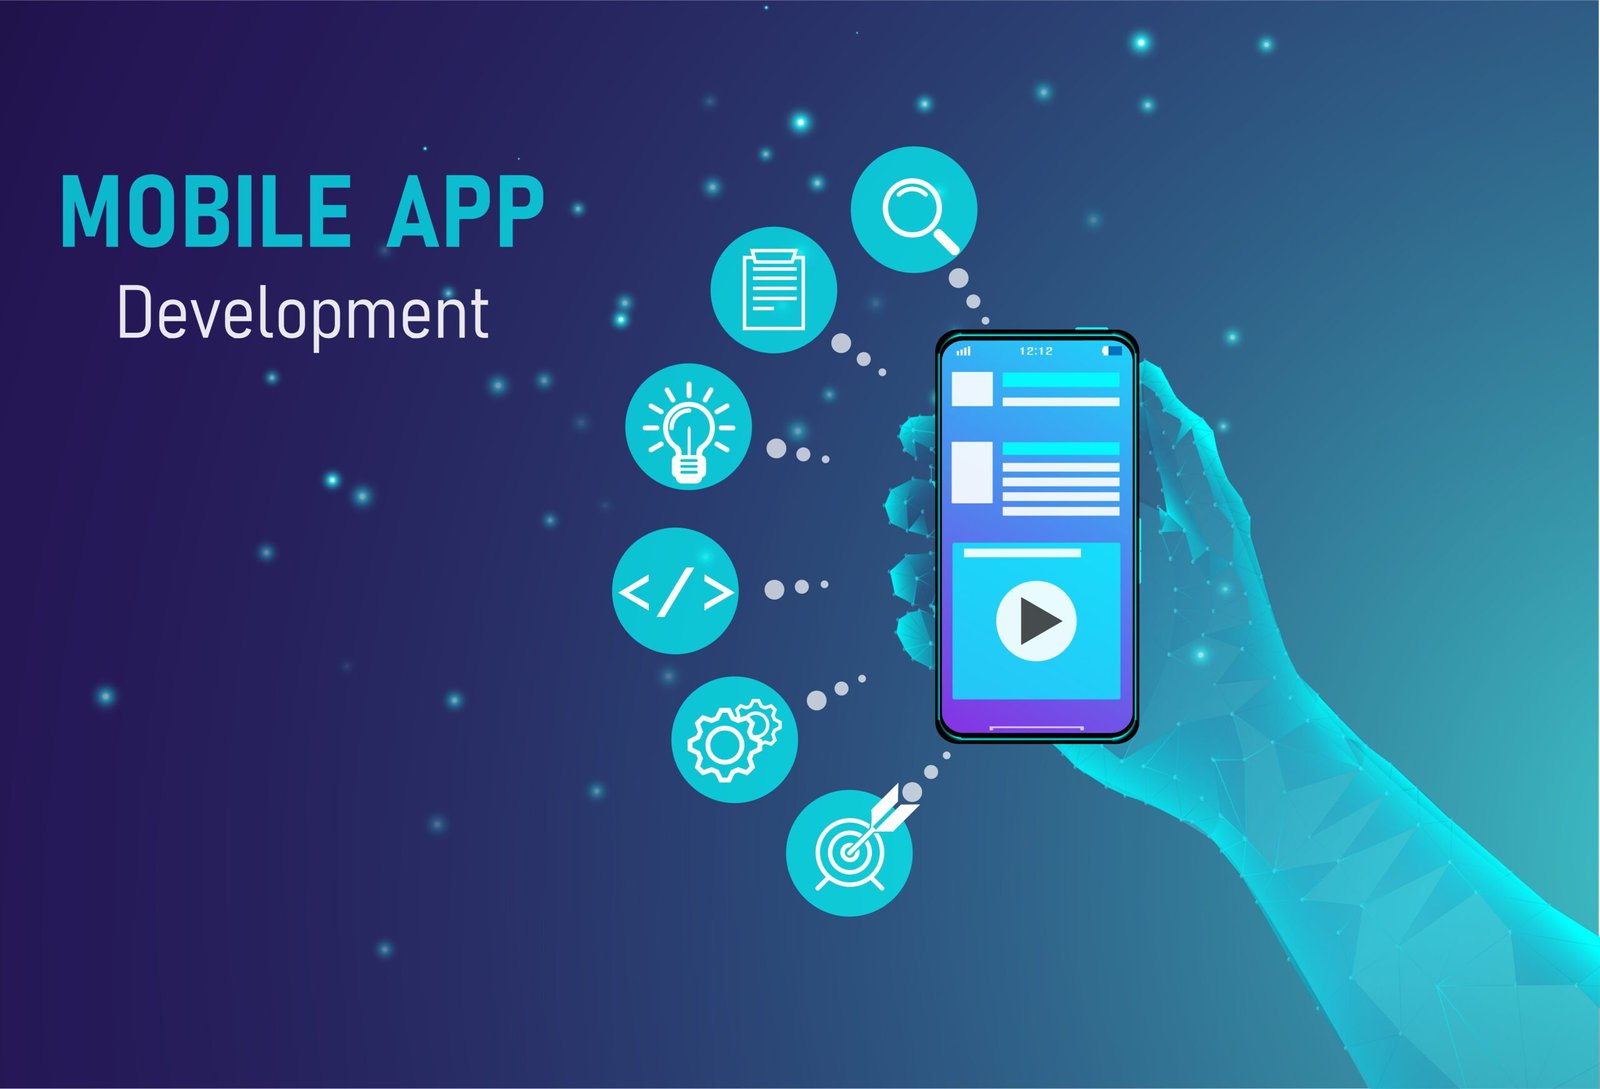 mobile-app-development-company